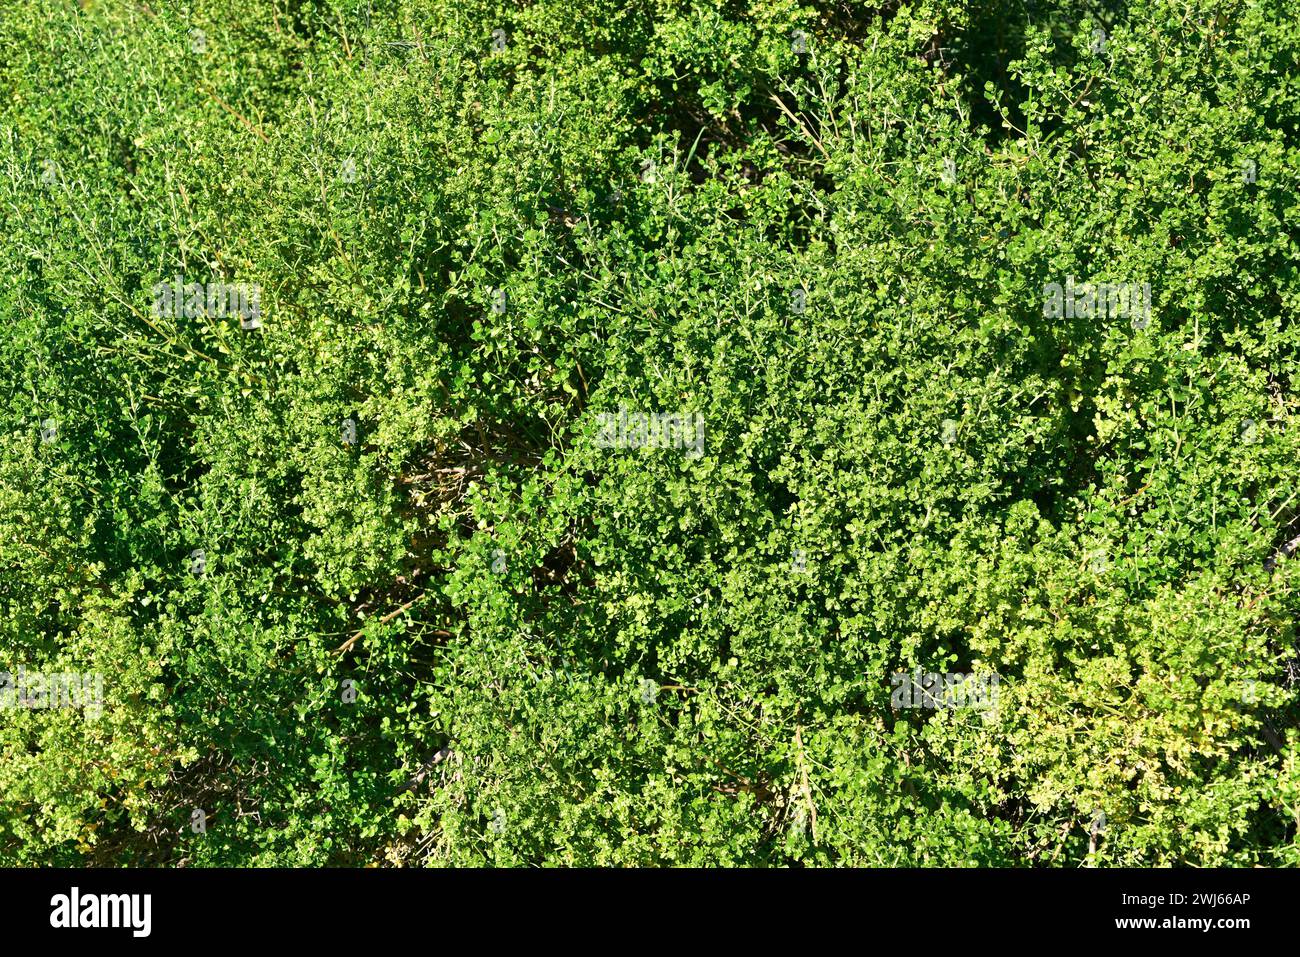 Vautro or gaultro (Baccharis concava) is a perennial shrub native to Chile. Stock Photo